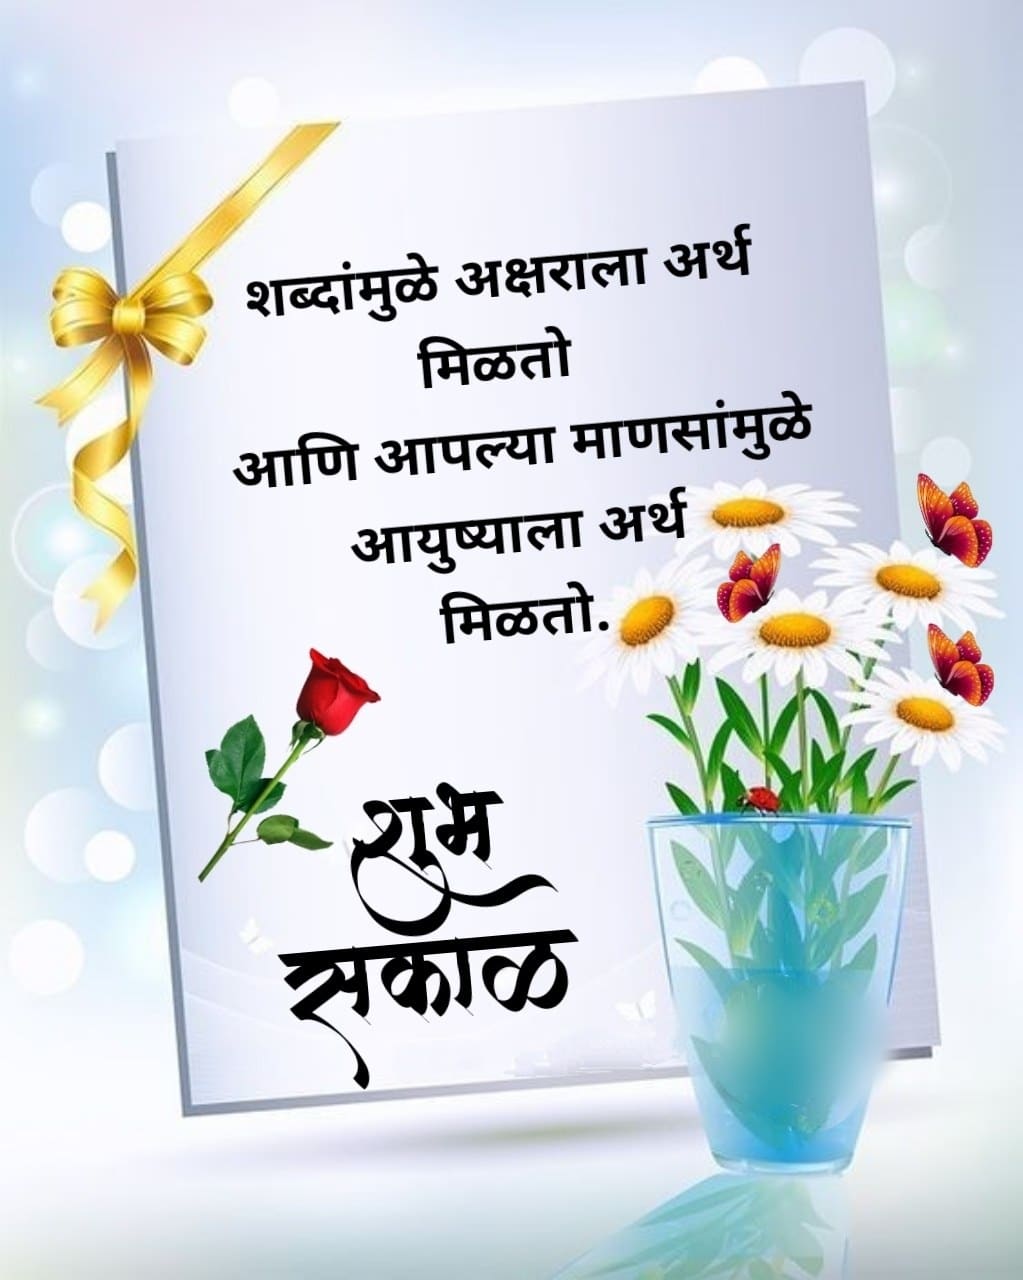 Good Morning Relationship Quotes In Marathi